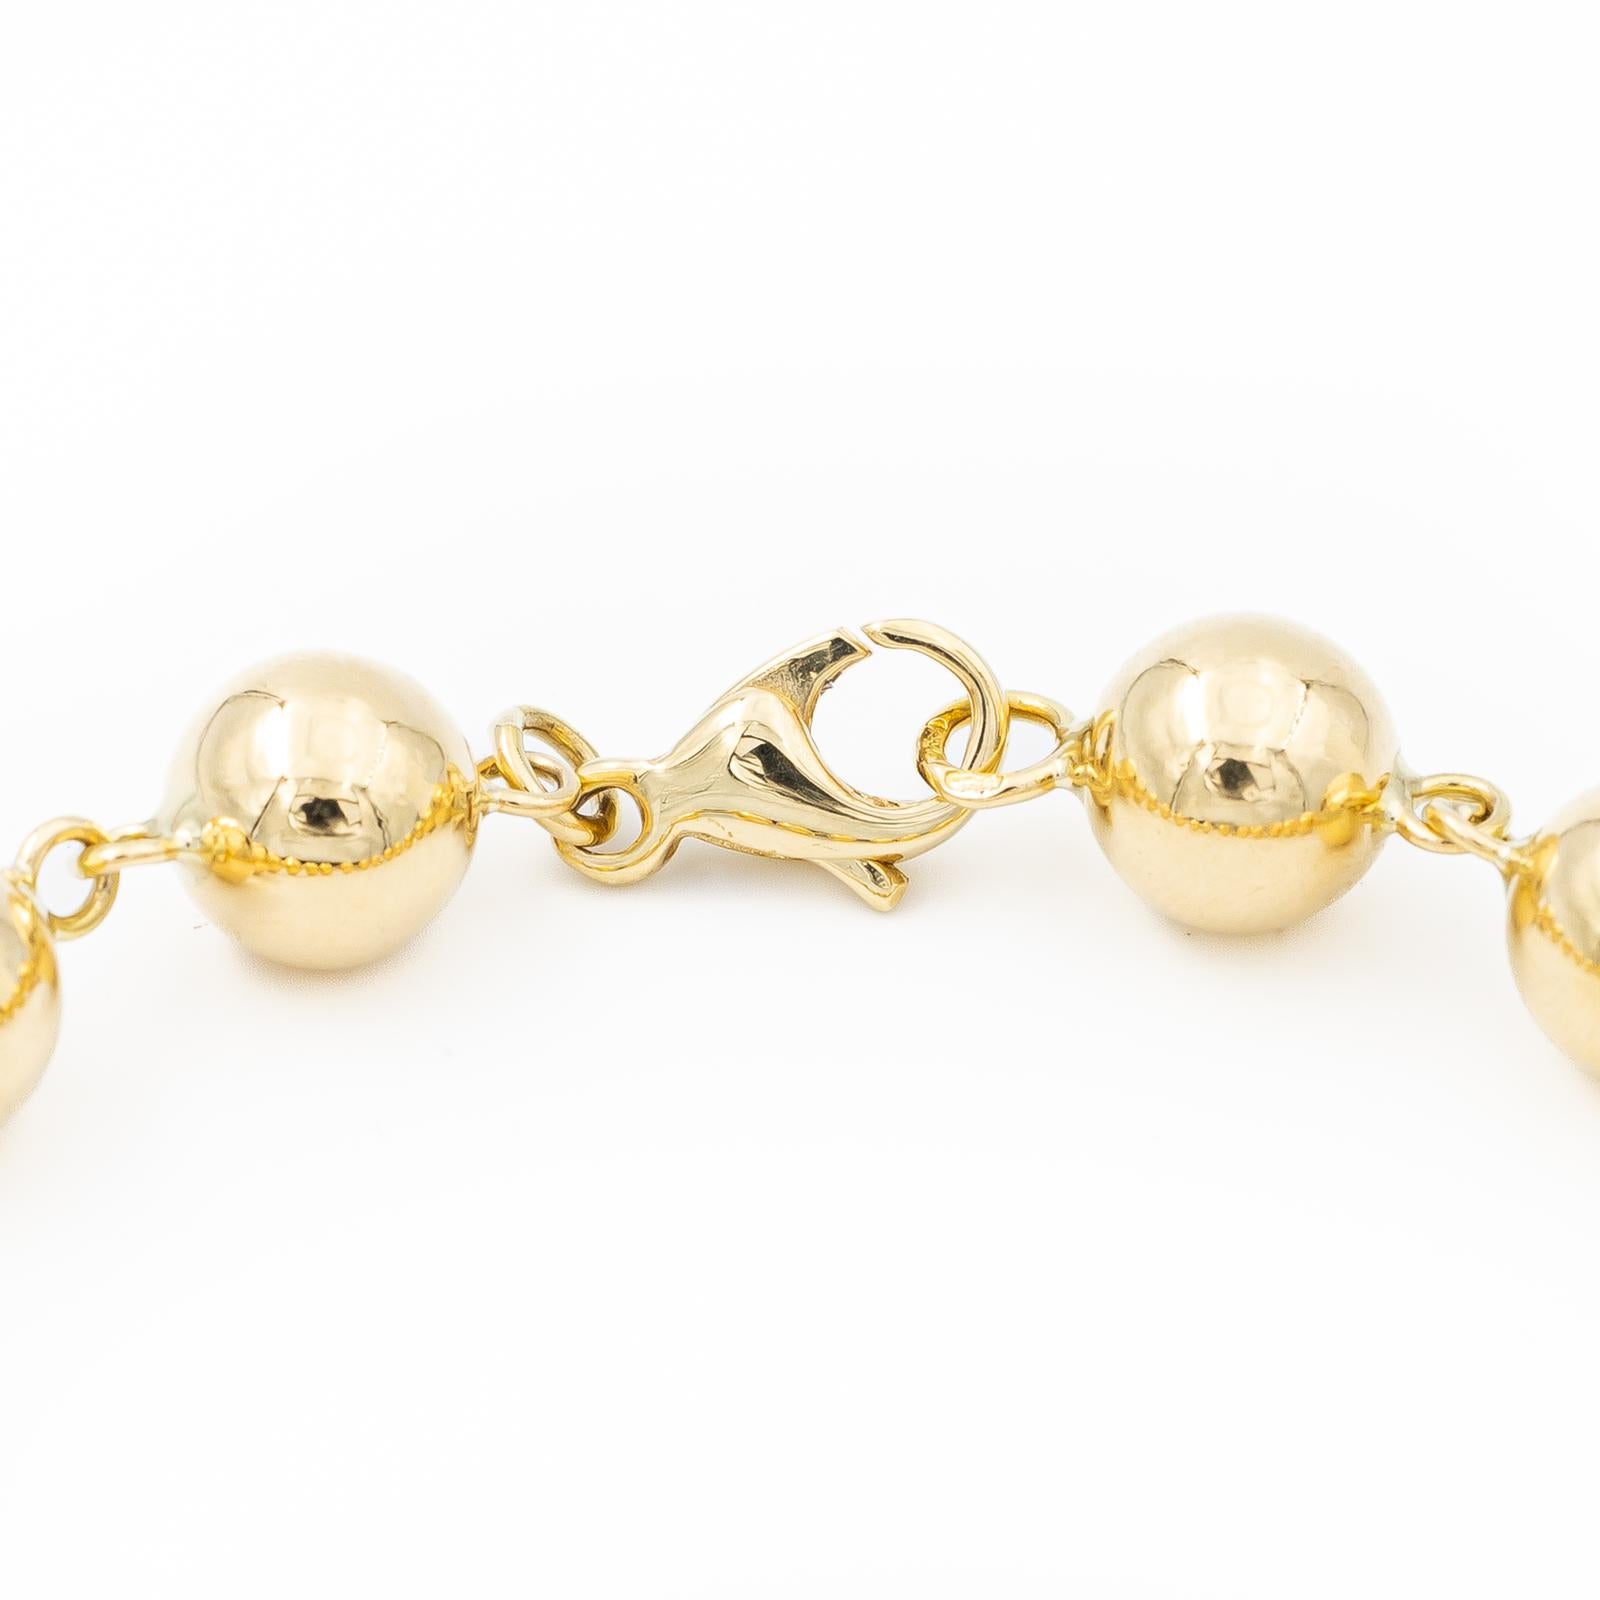 Bracelet femme trois heures, or blanc, or jaune, or rose, avec boules en or  14 carats, poids 3,7 g : Amazon.fr: Mode